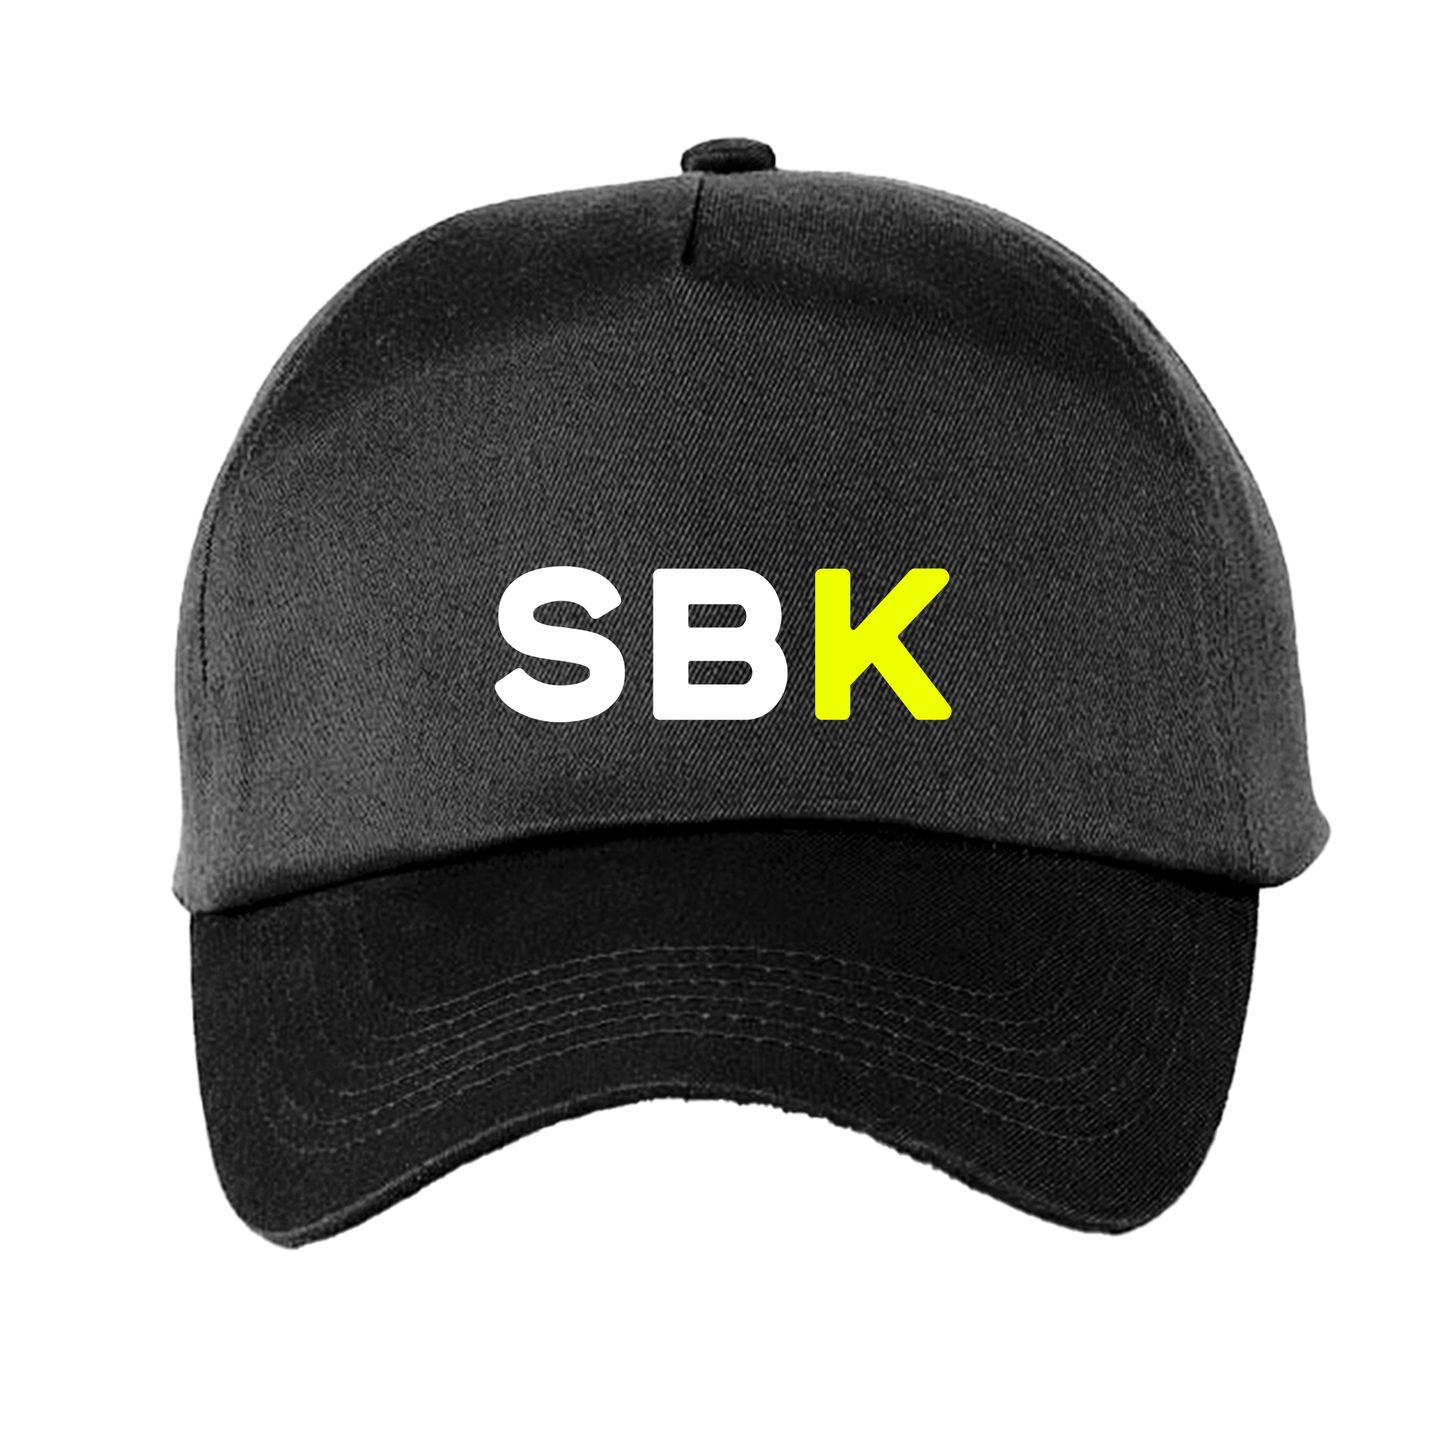 SBK Youth Cap